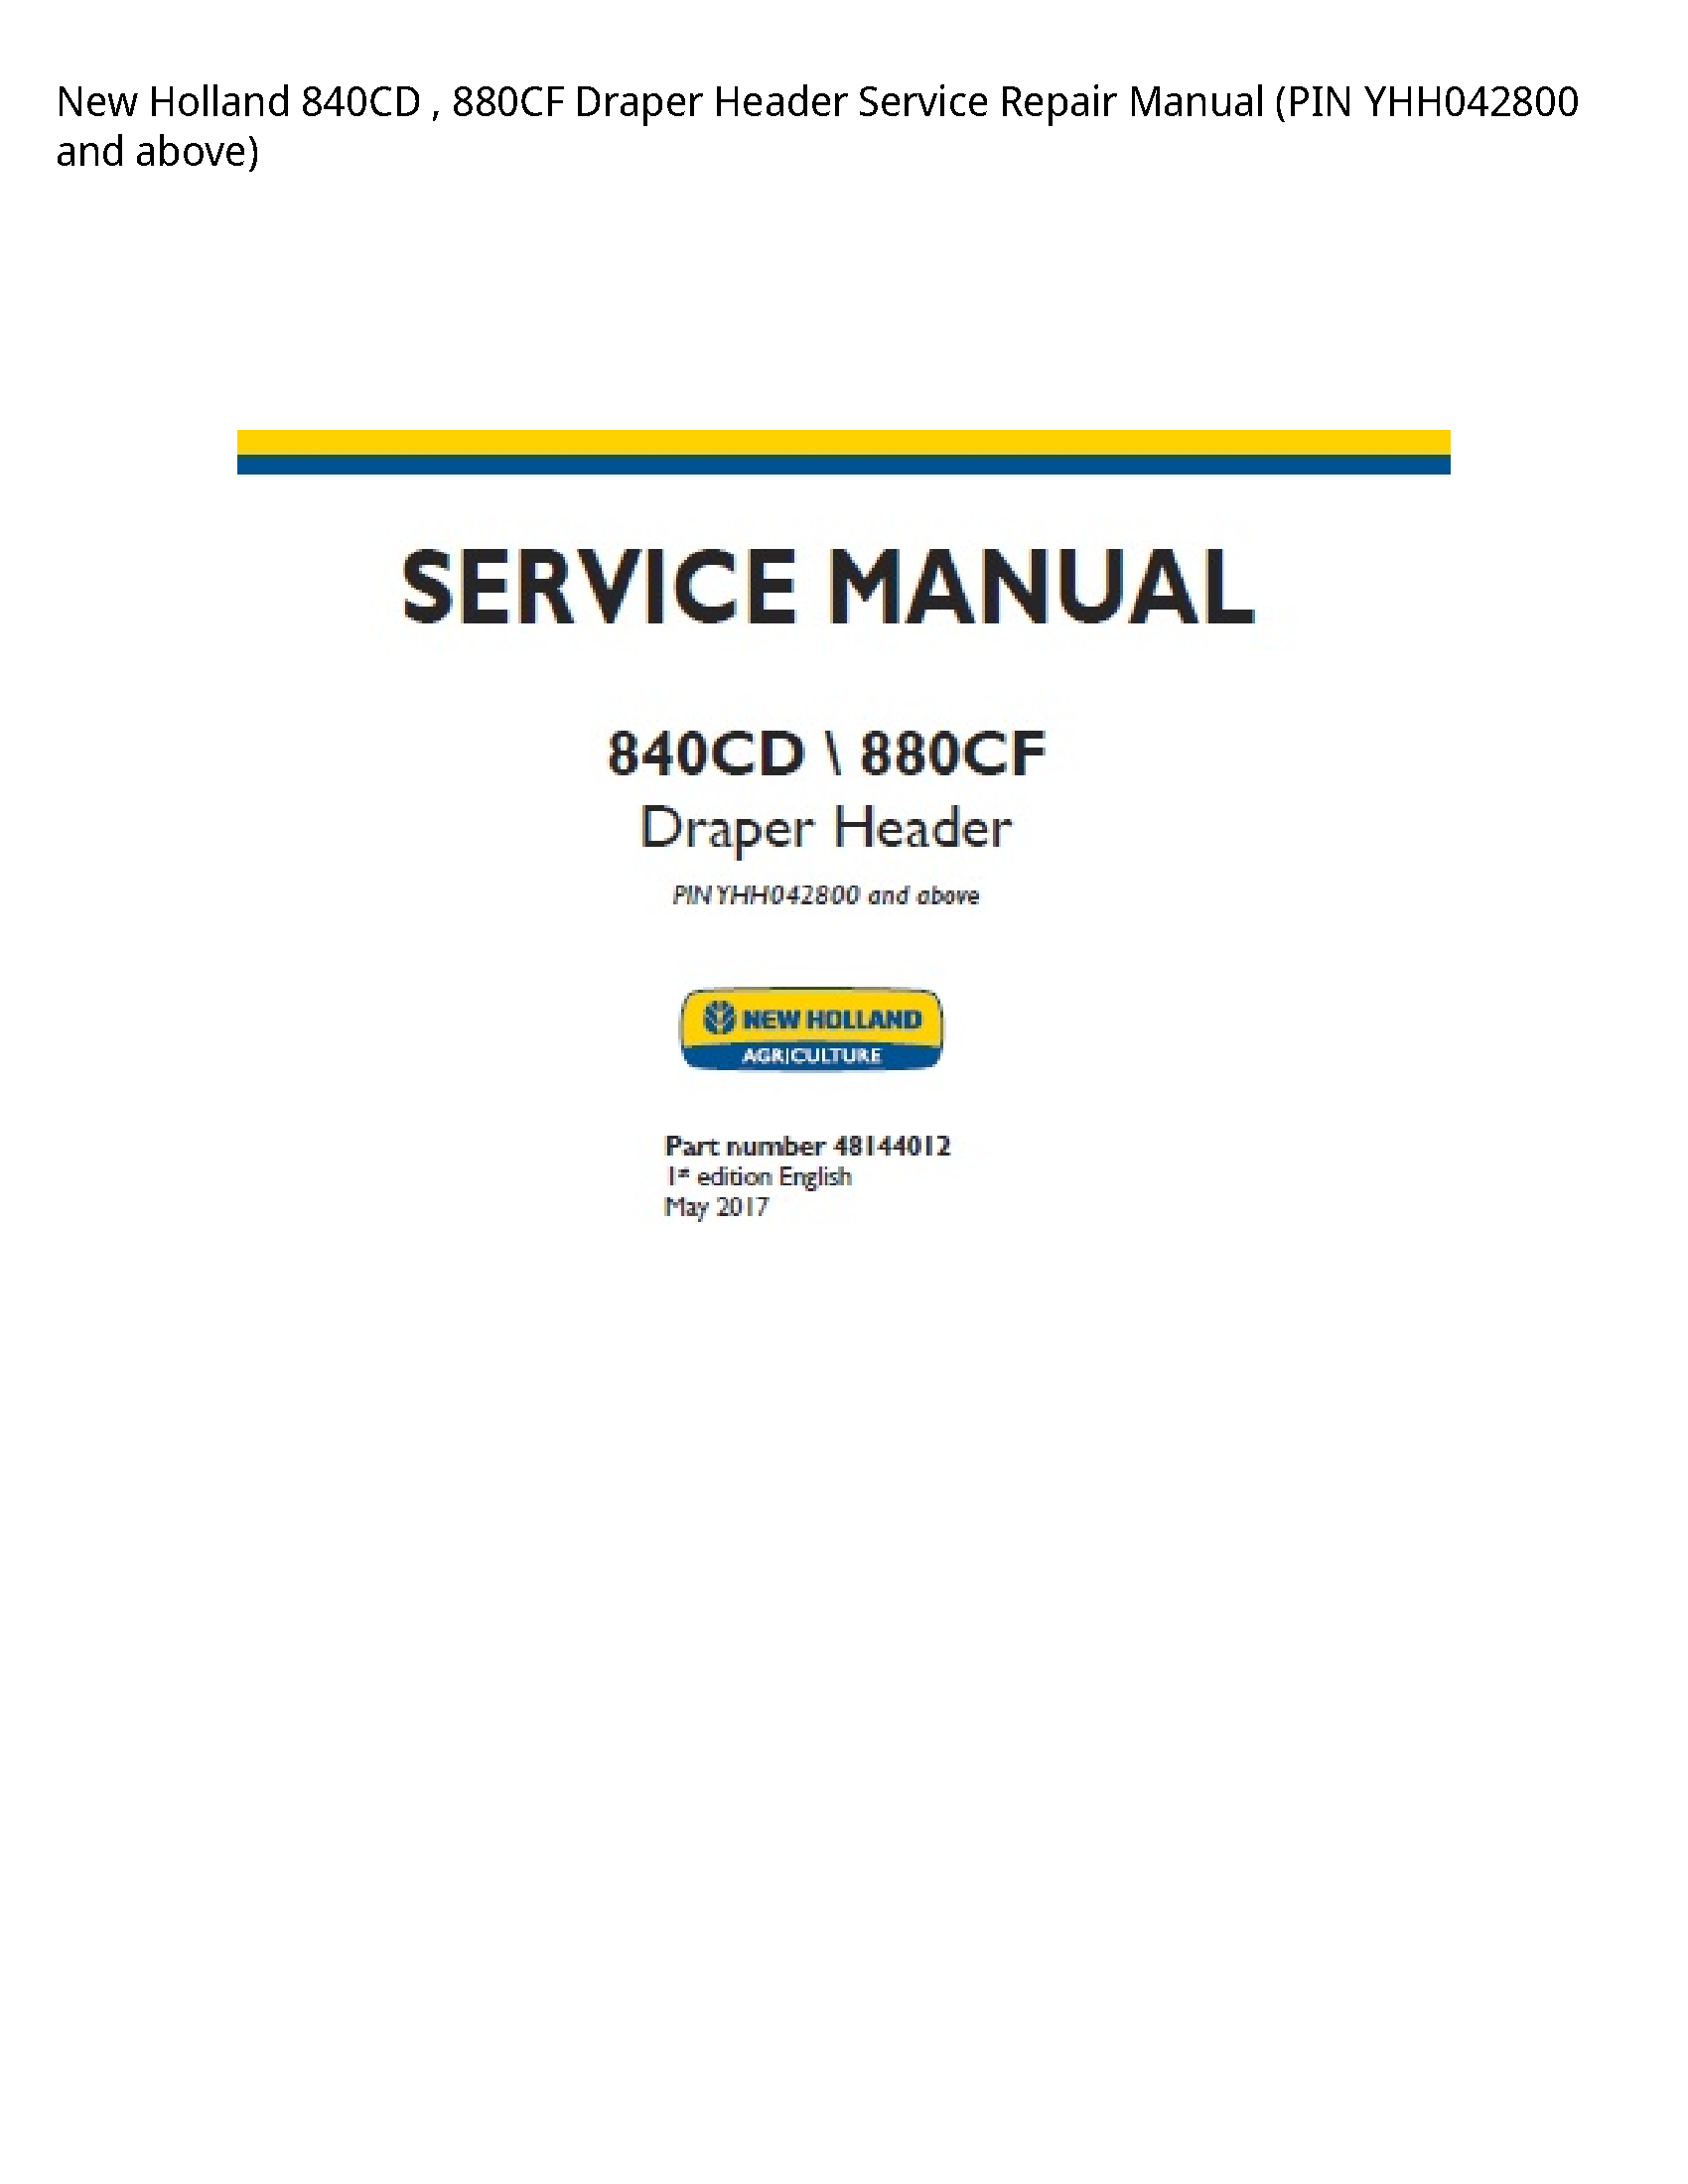 New Holland 840CD Draper Header manual